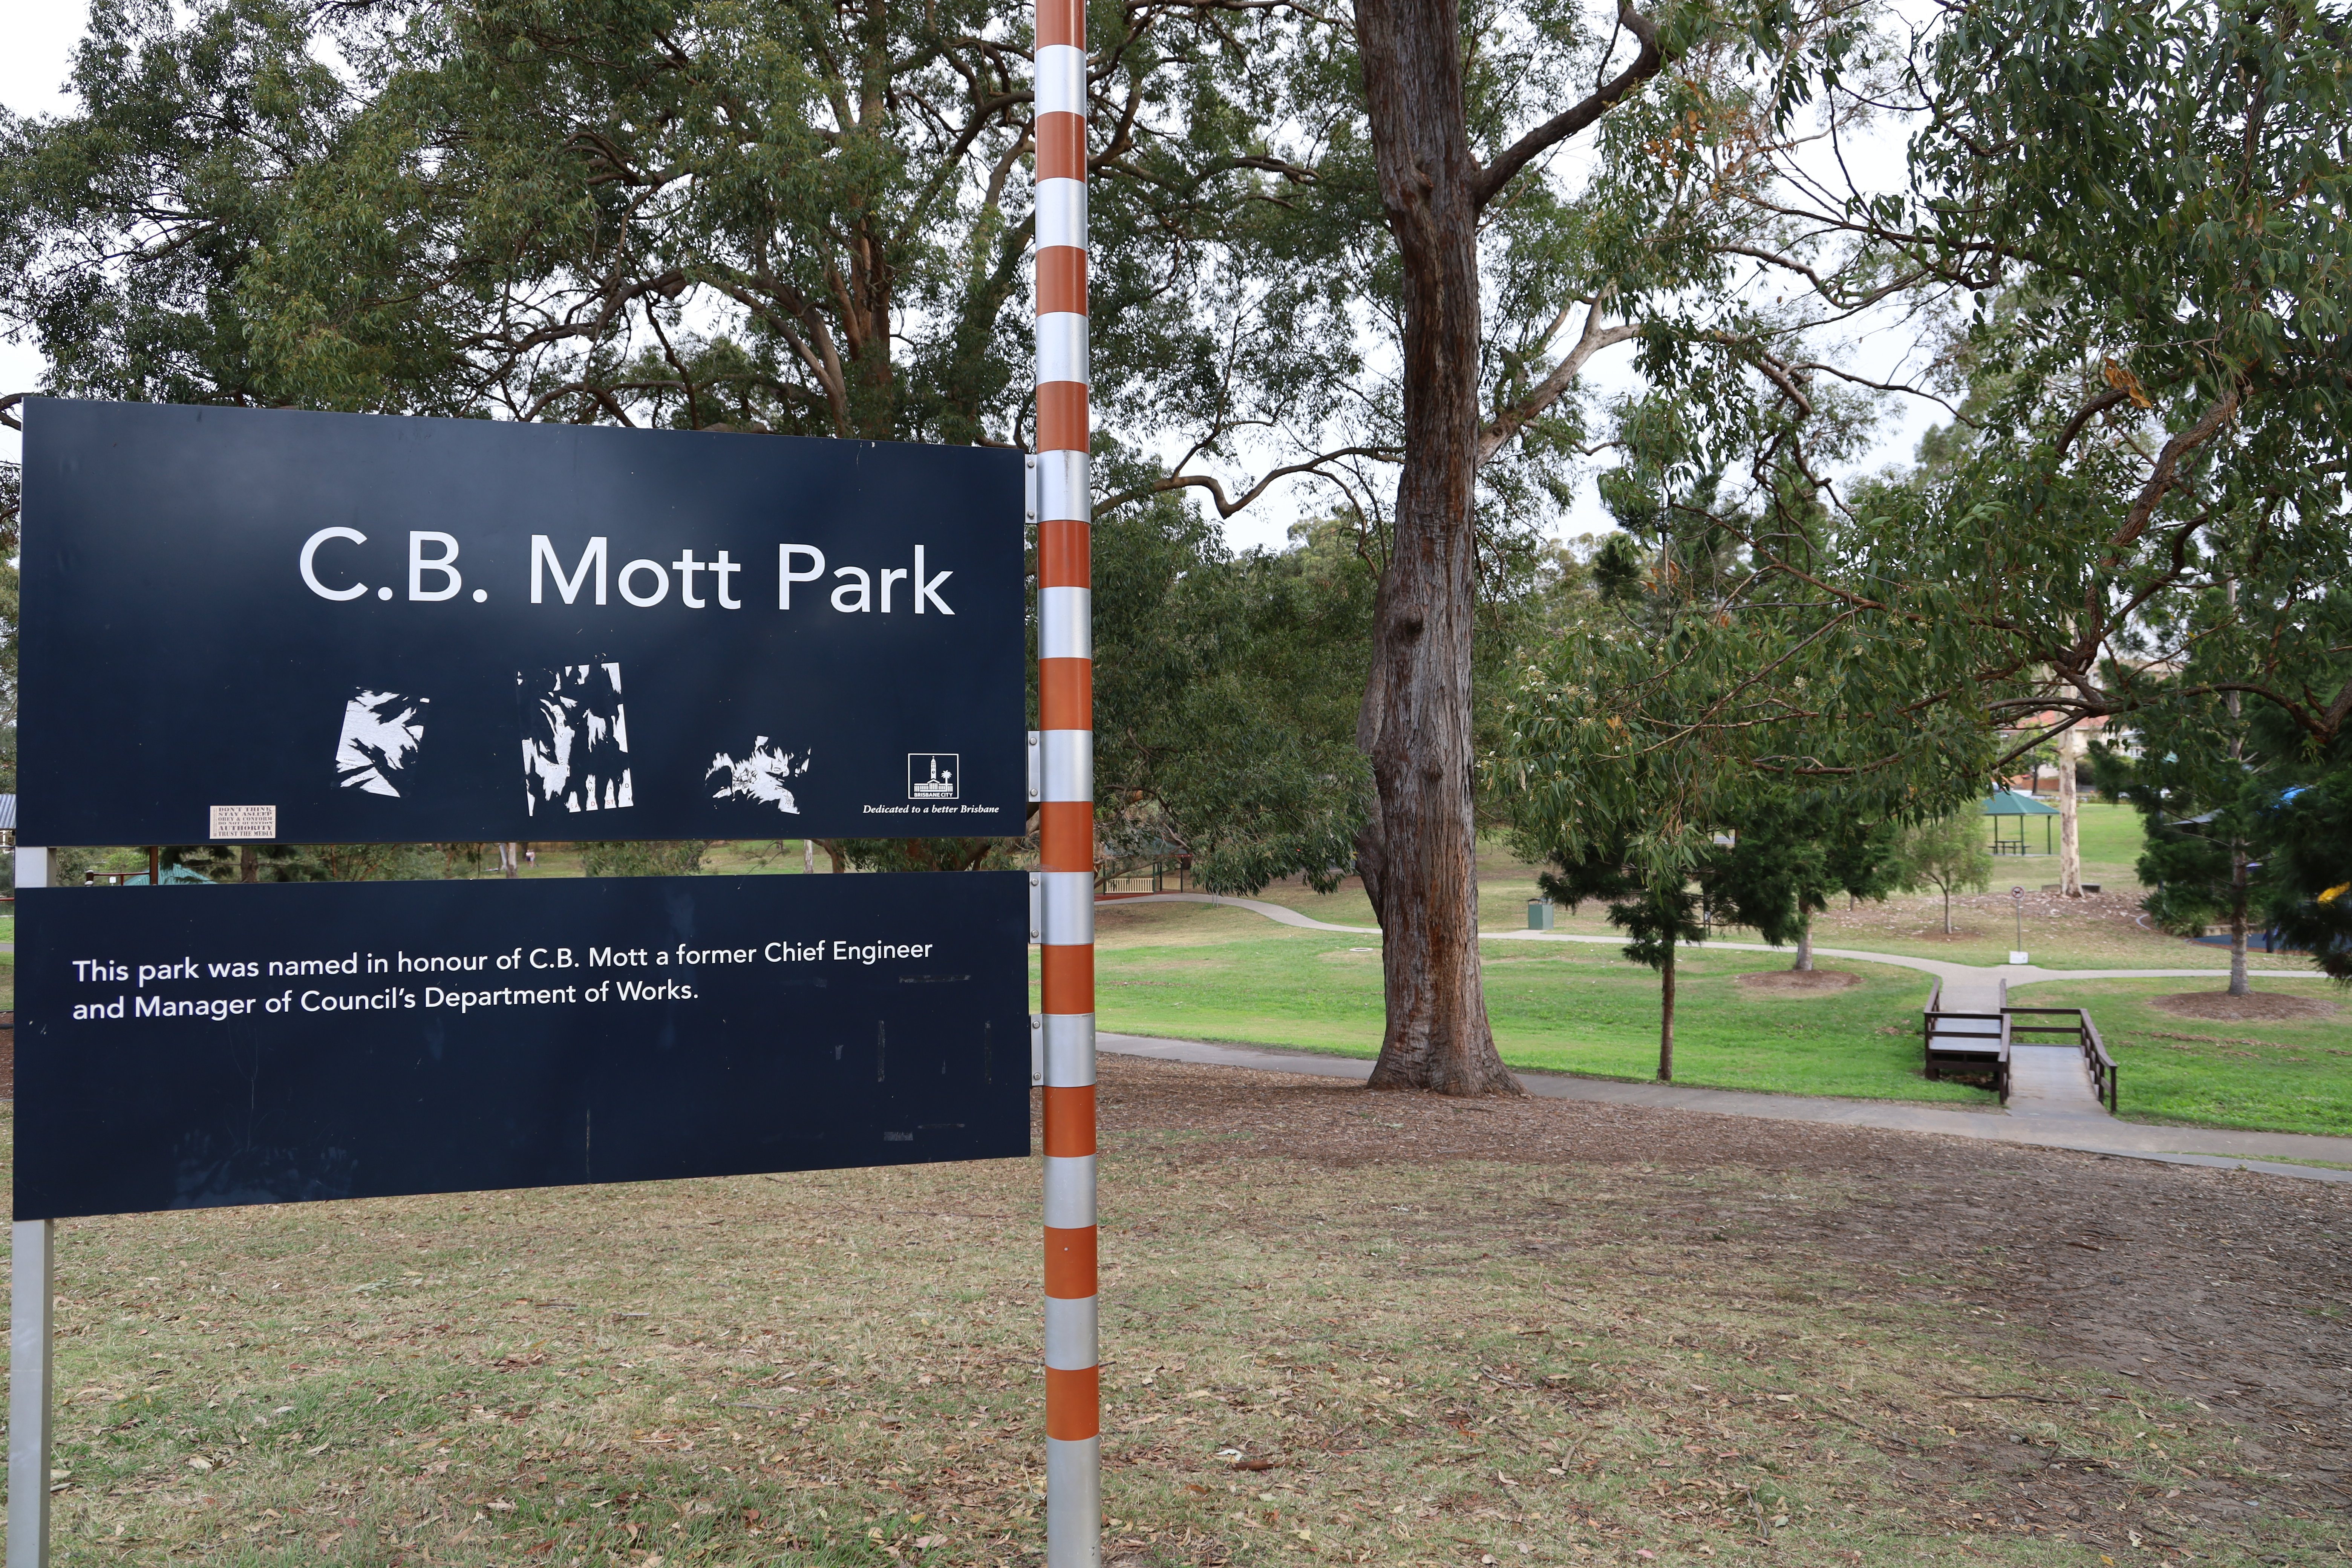 C.B Mott Park, Holland Park